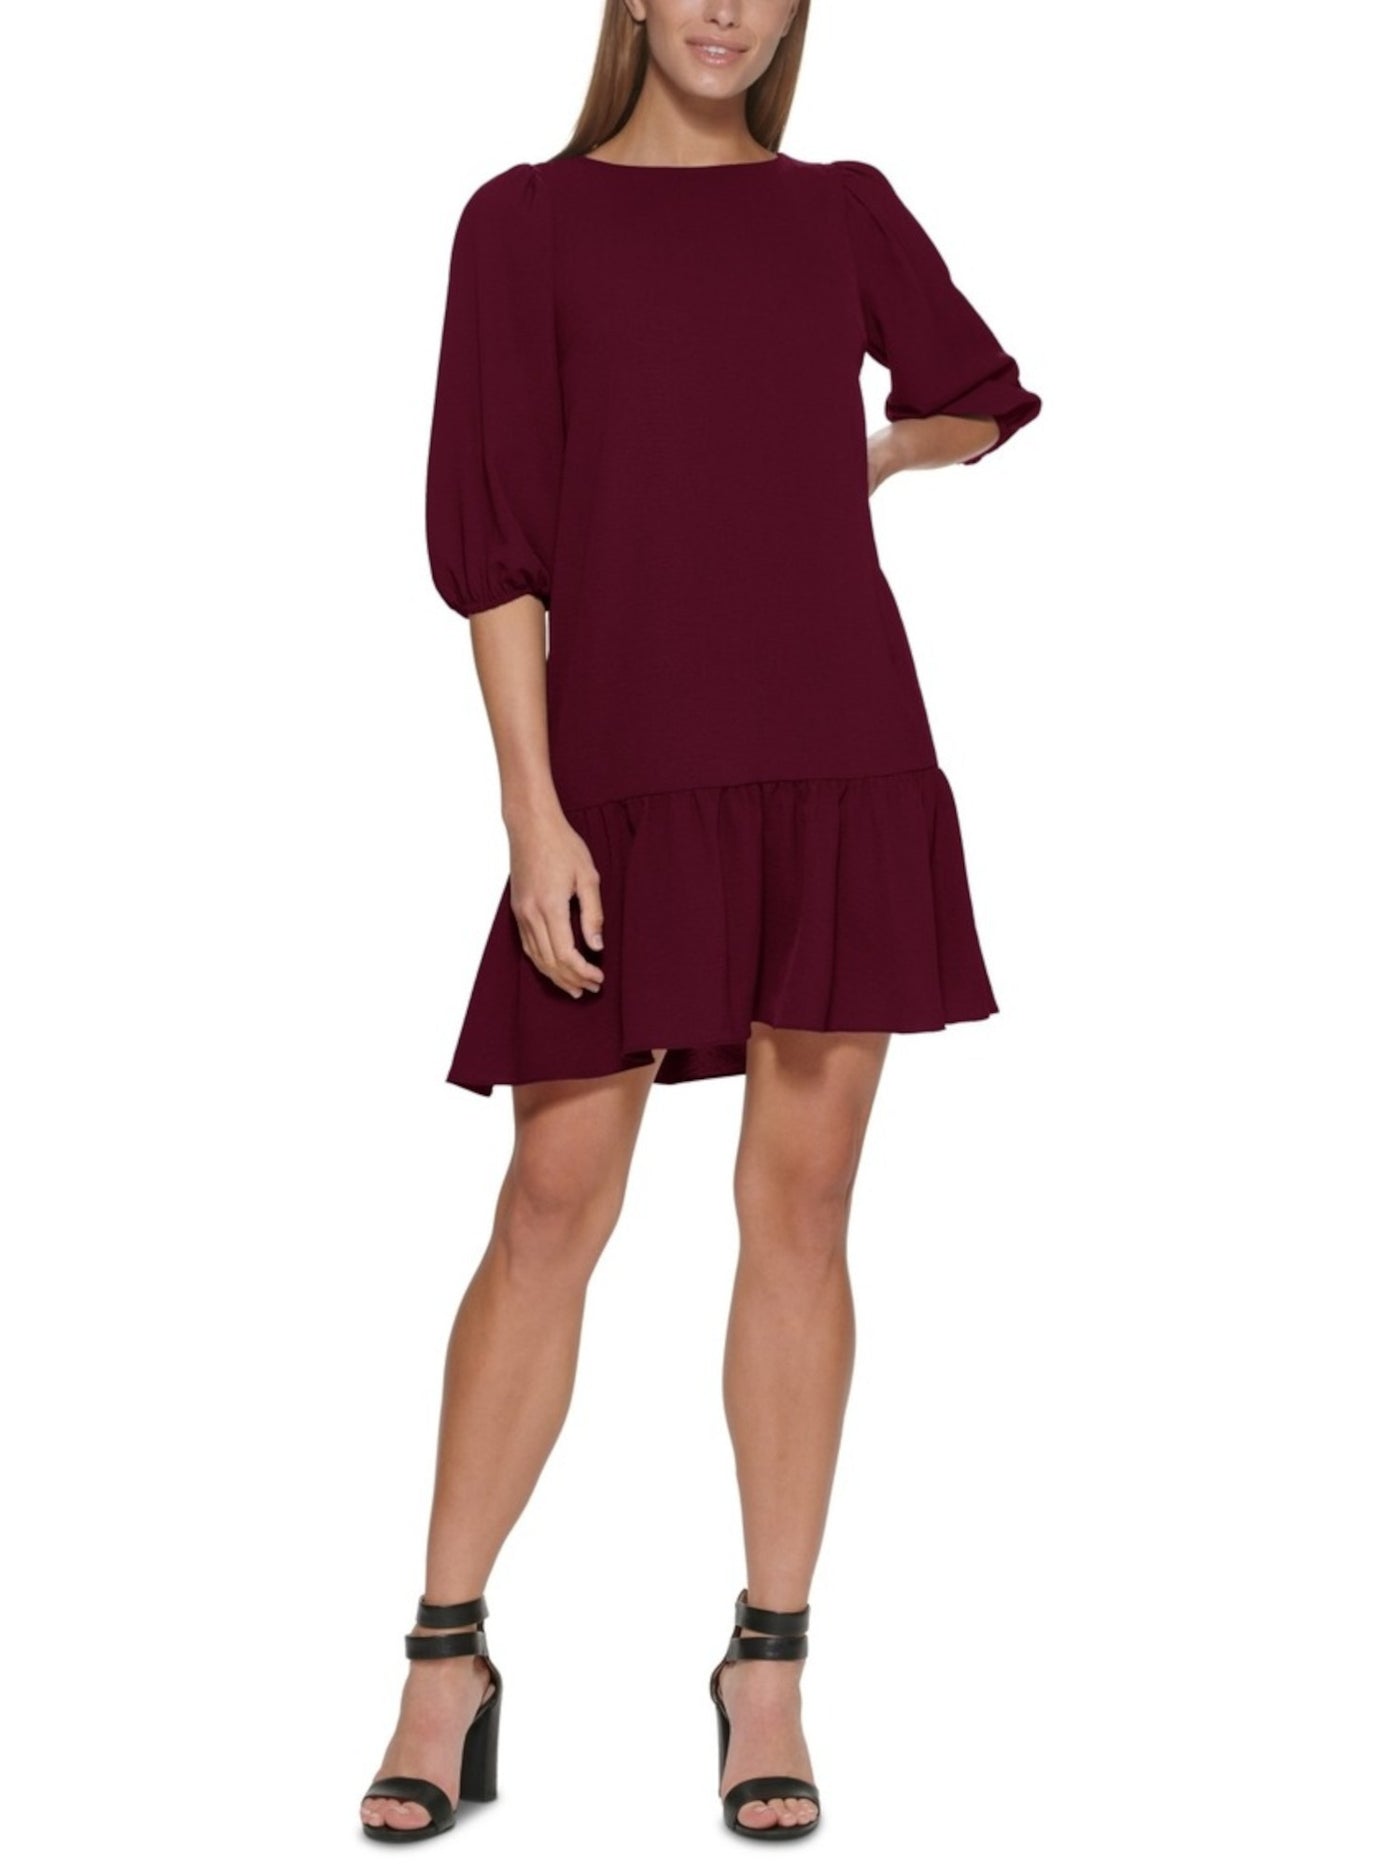 DKNY Womens Burgundy Textured Zippered Ruffled Hem Elbow Sleeve Jewel Neck Above The Knee Party Shift Dress 6